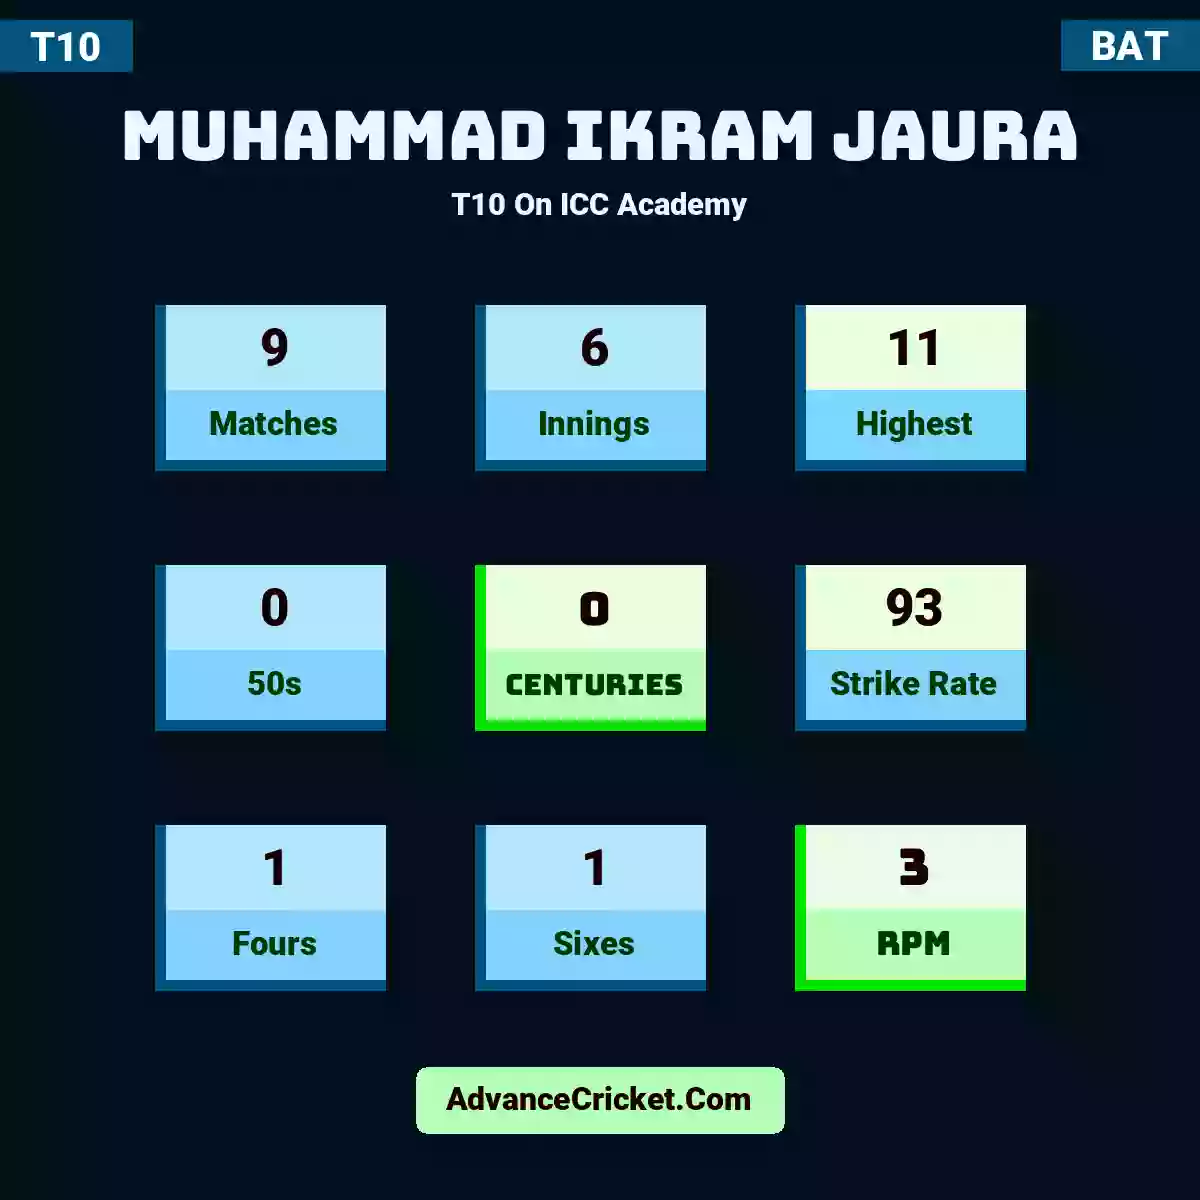 Muhammad Ikram Jaura T10  On ICC Academy, Muhammad Ikram Jaura played 9 matches, scored 11 runs as highest, 0 half-centuries, and 0 centuries, with a strike rate of 93. M.Ikram.Jaura hit 1 fours and 1 sixes, with an RPM of 3.